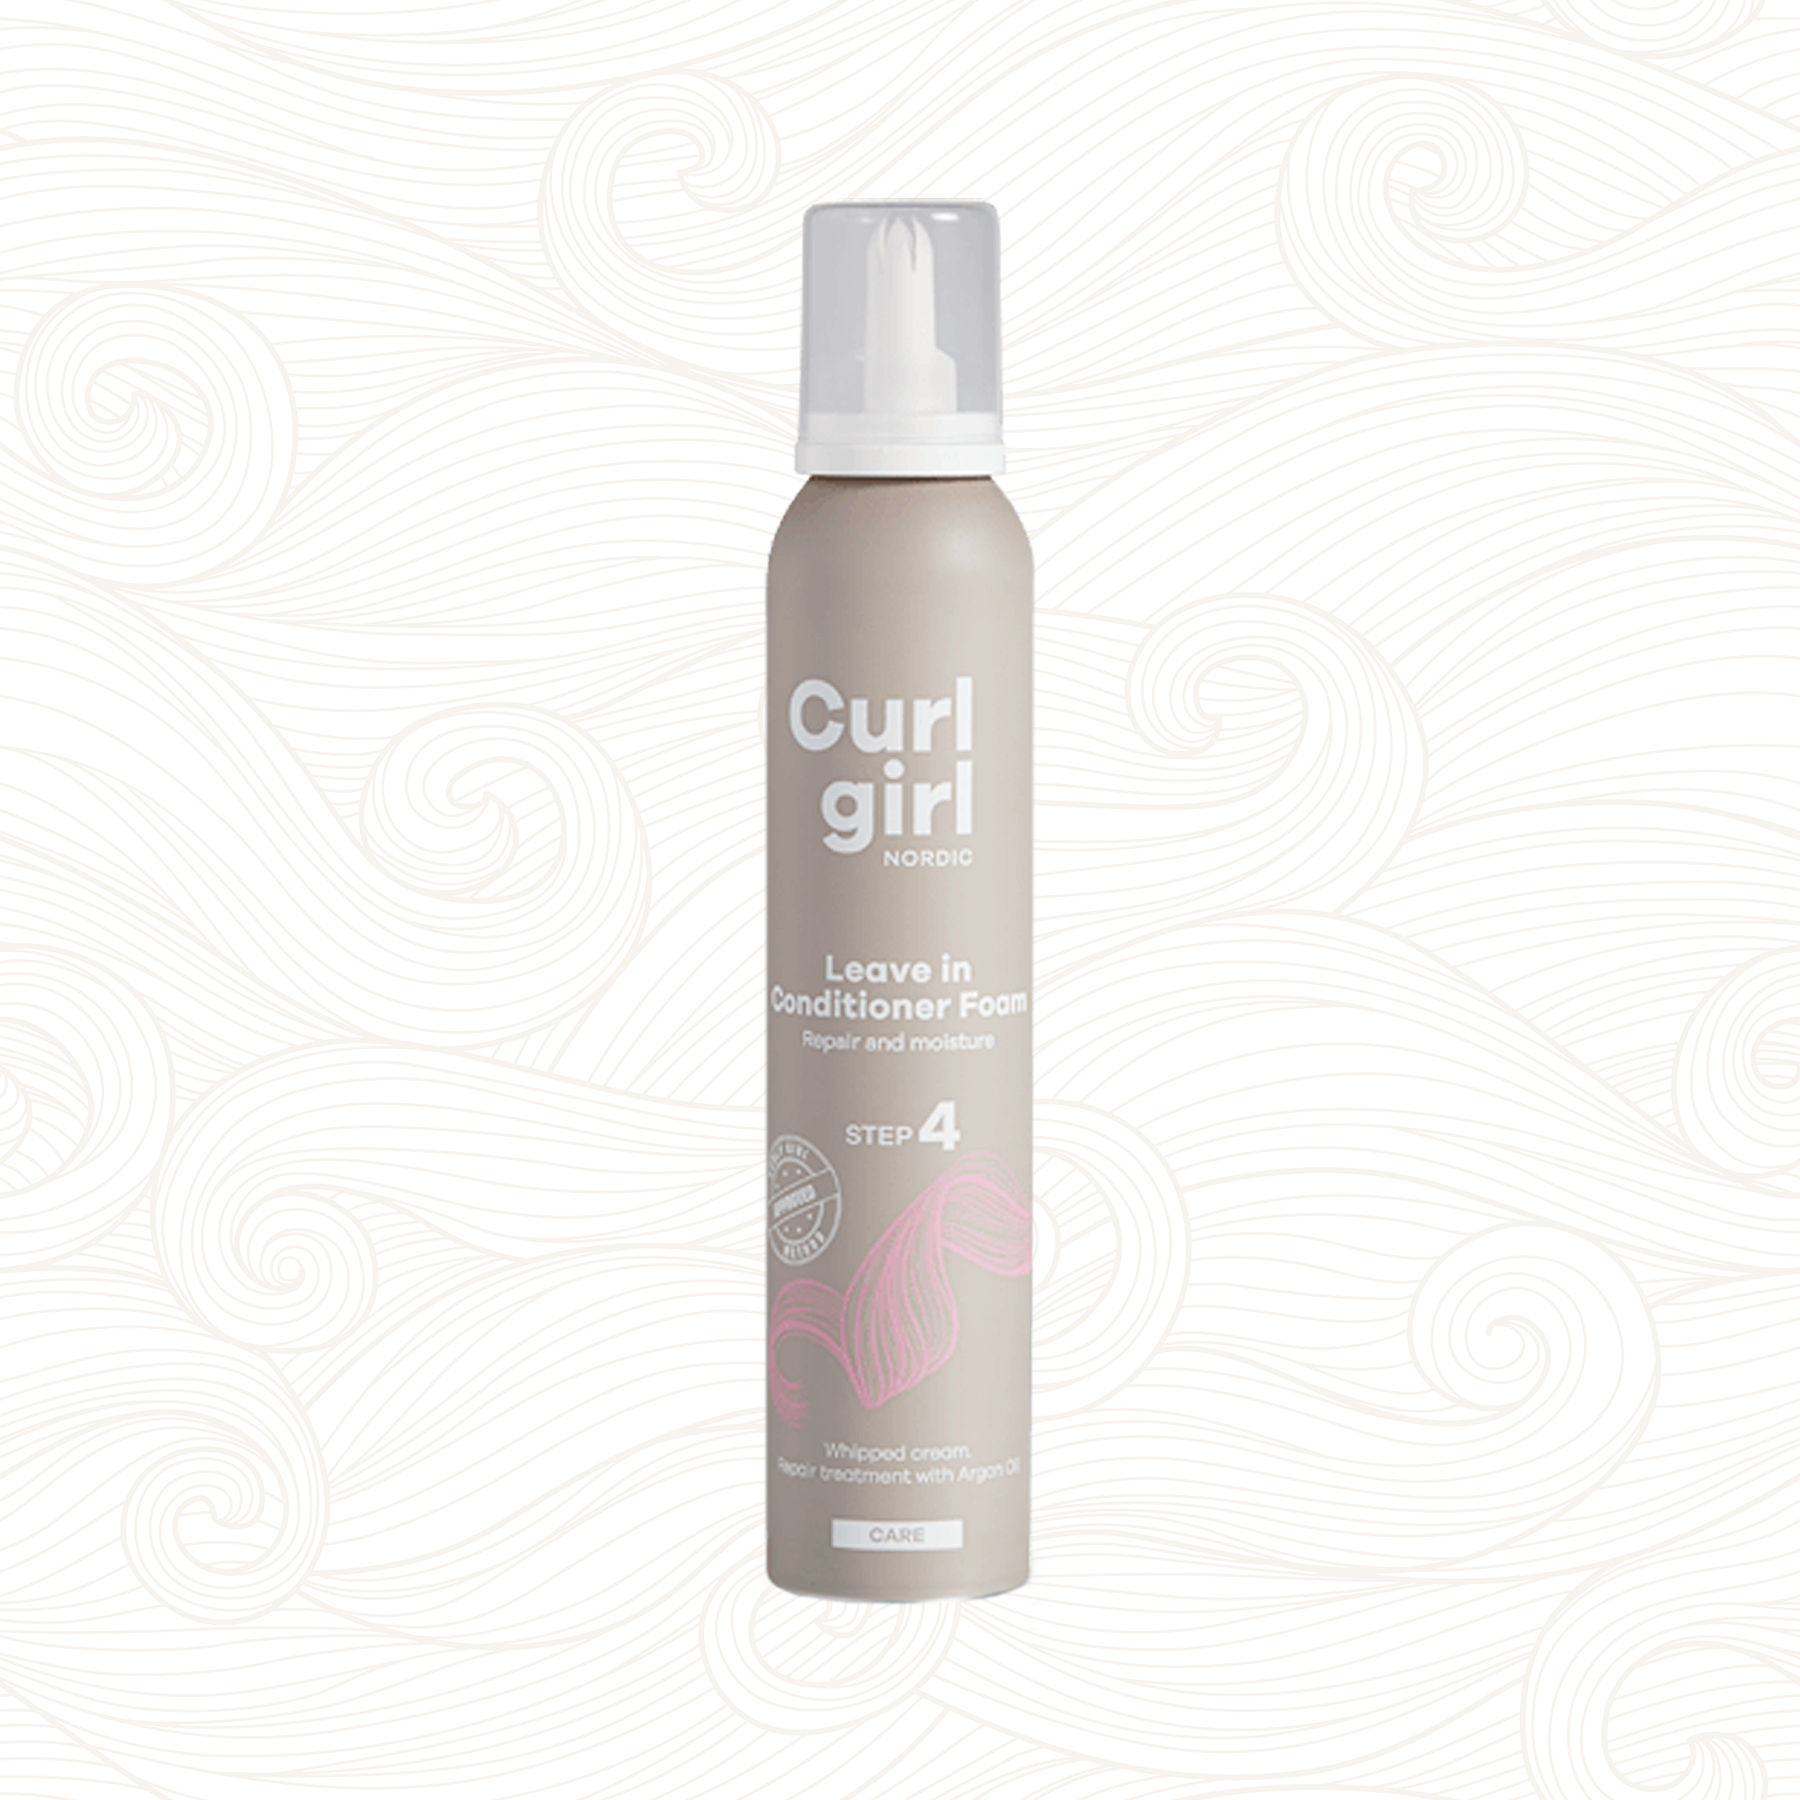 Curl Girl Nordic | Leave-In Conditioner Foam /200ml Leave-In Curl Girl Nordic